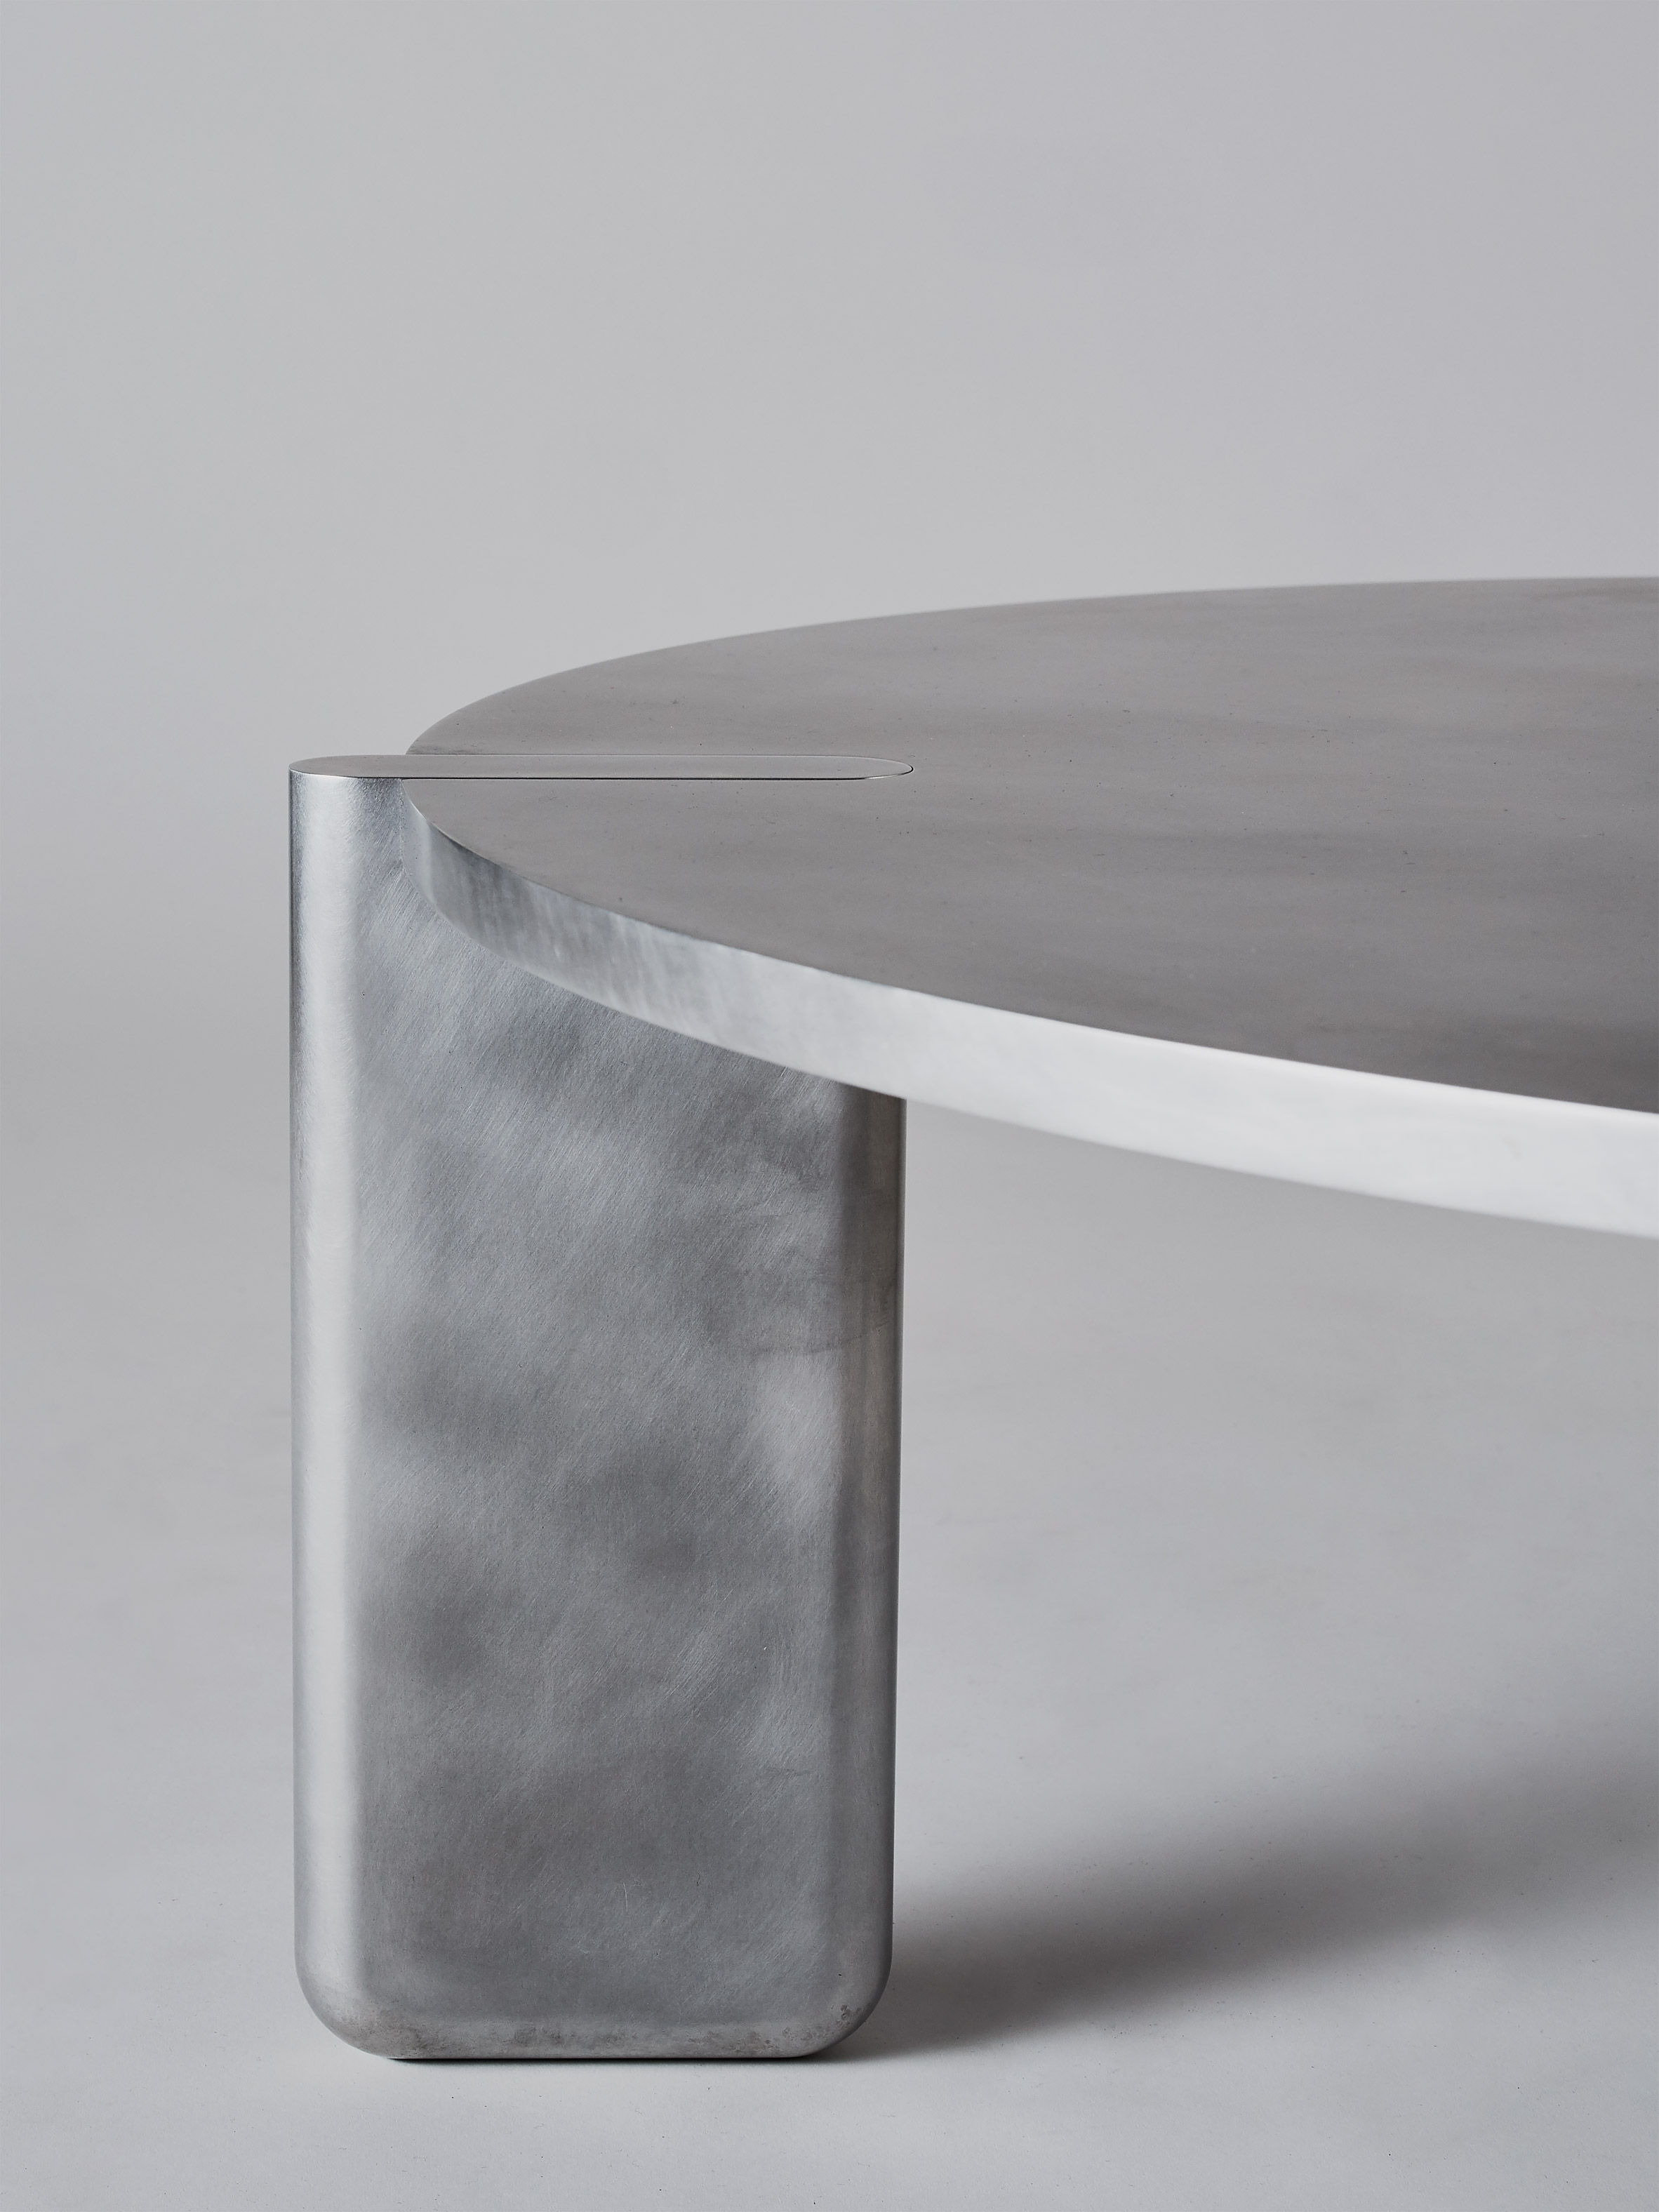 Pelle aluminium table